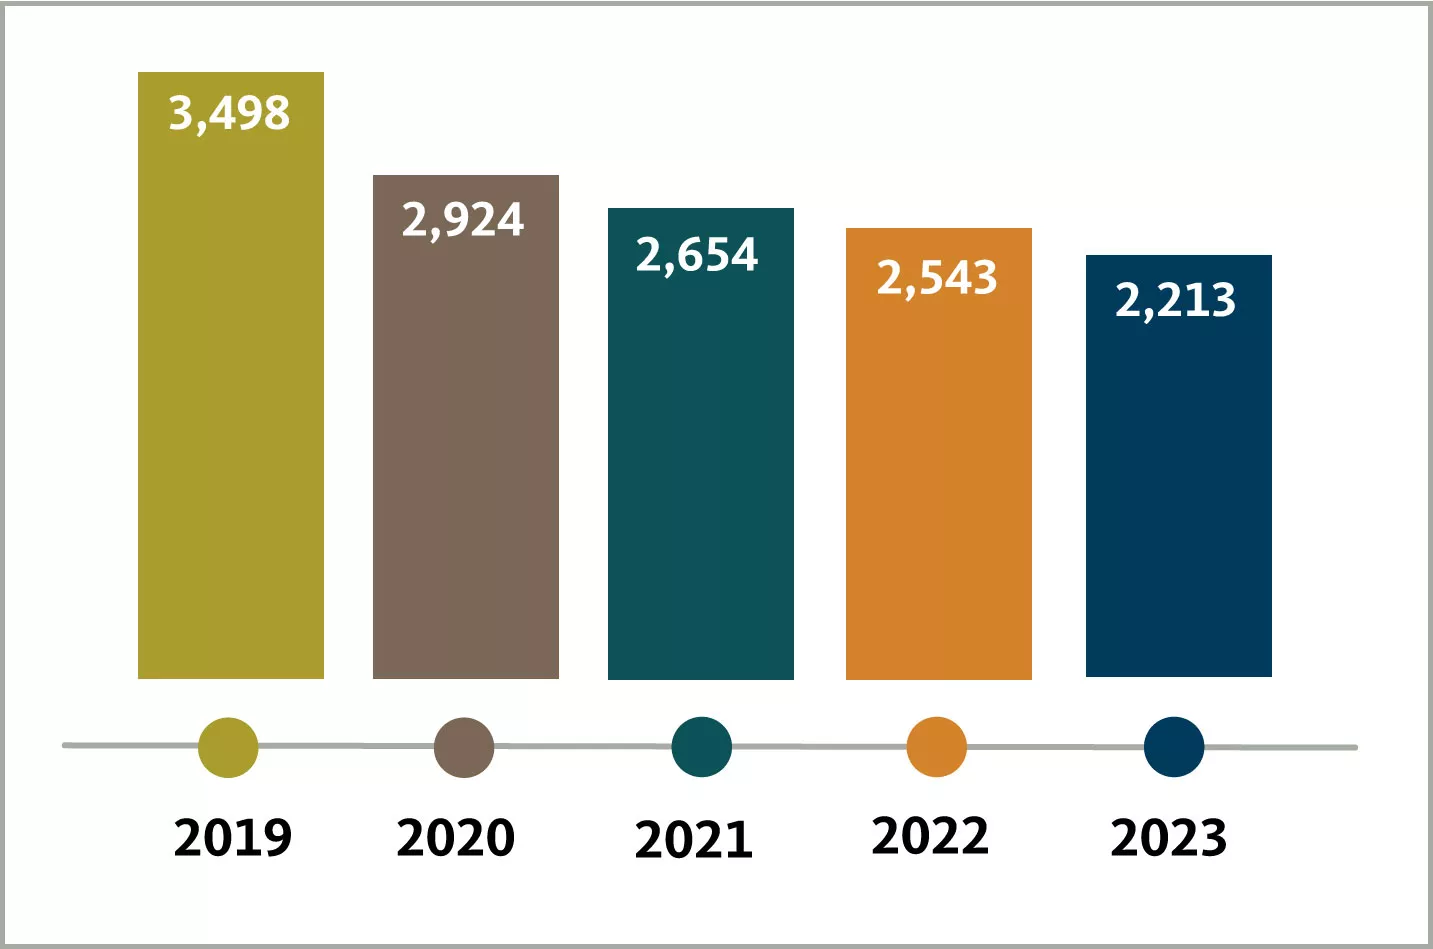 International student enrollment trends last 5 years (2019-2023): 3498, 2924, 2654, 2543, 2213